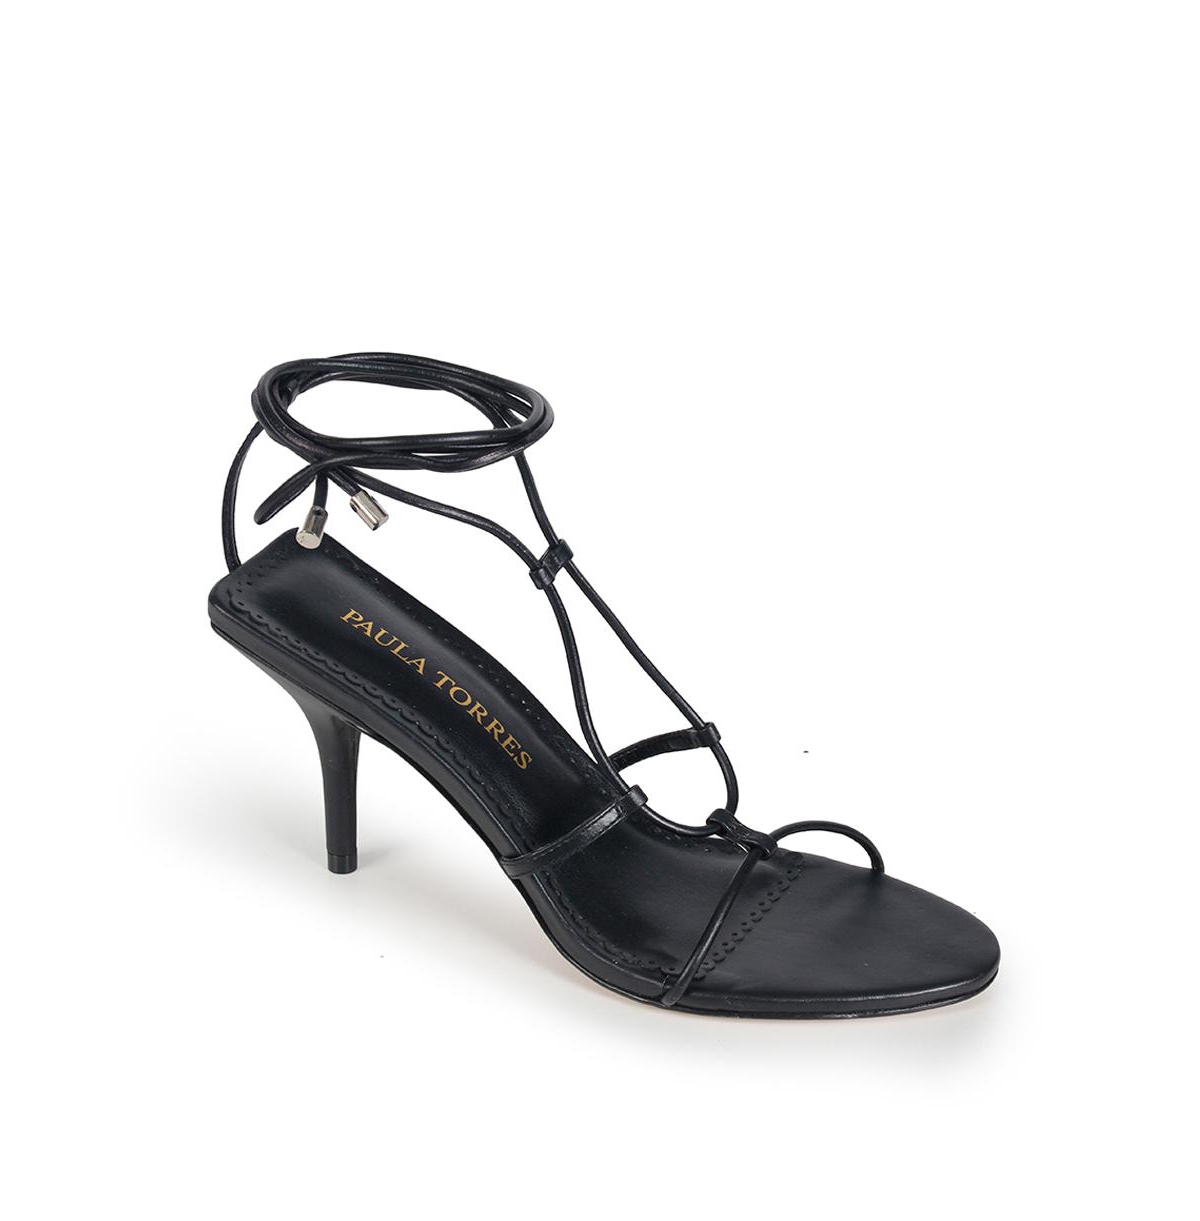 Shoes Women's Audrey Strappy Dress Sandal - Black